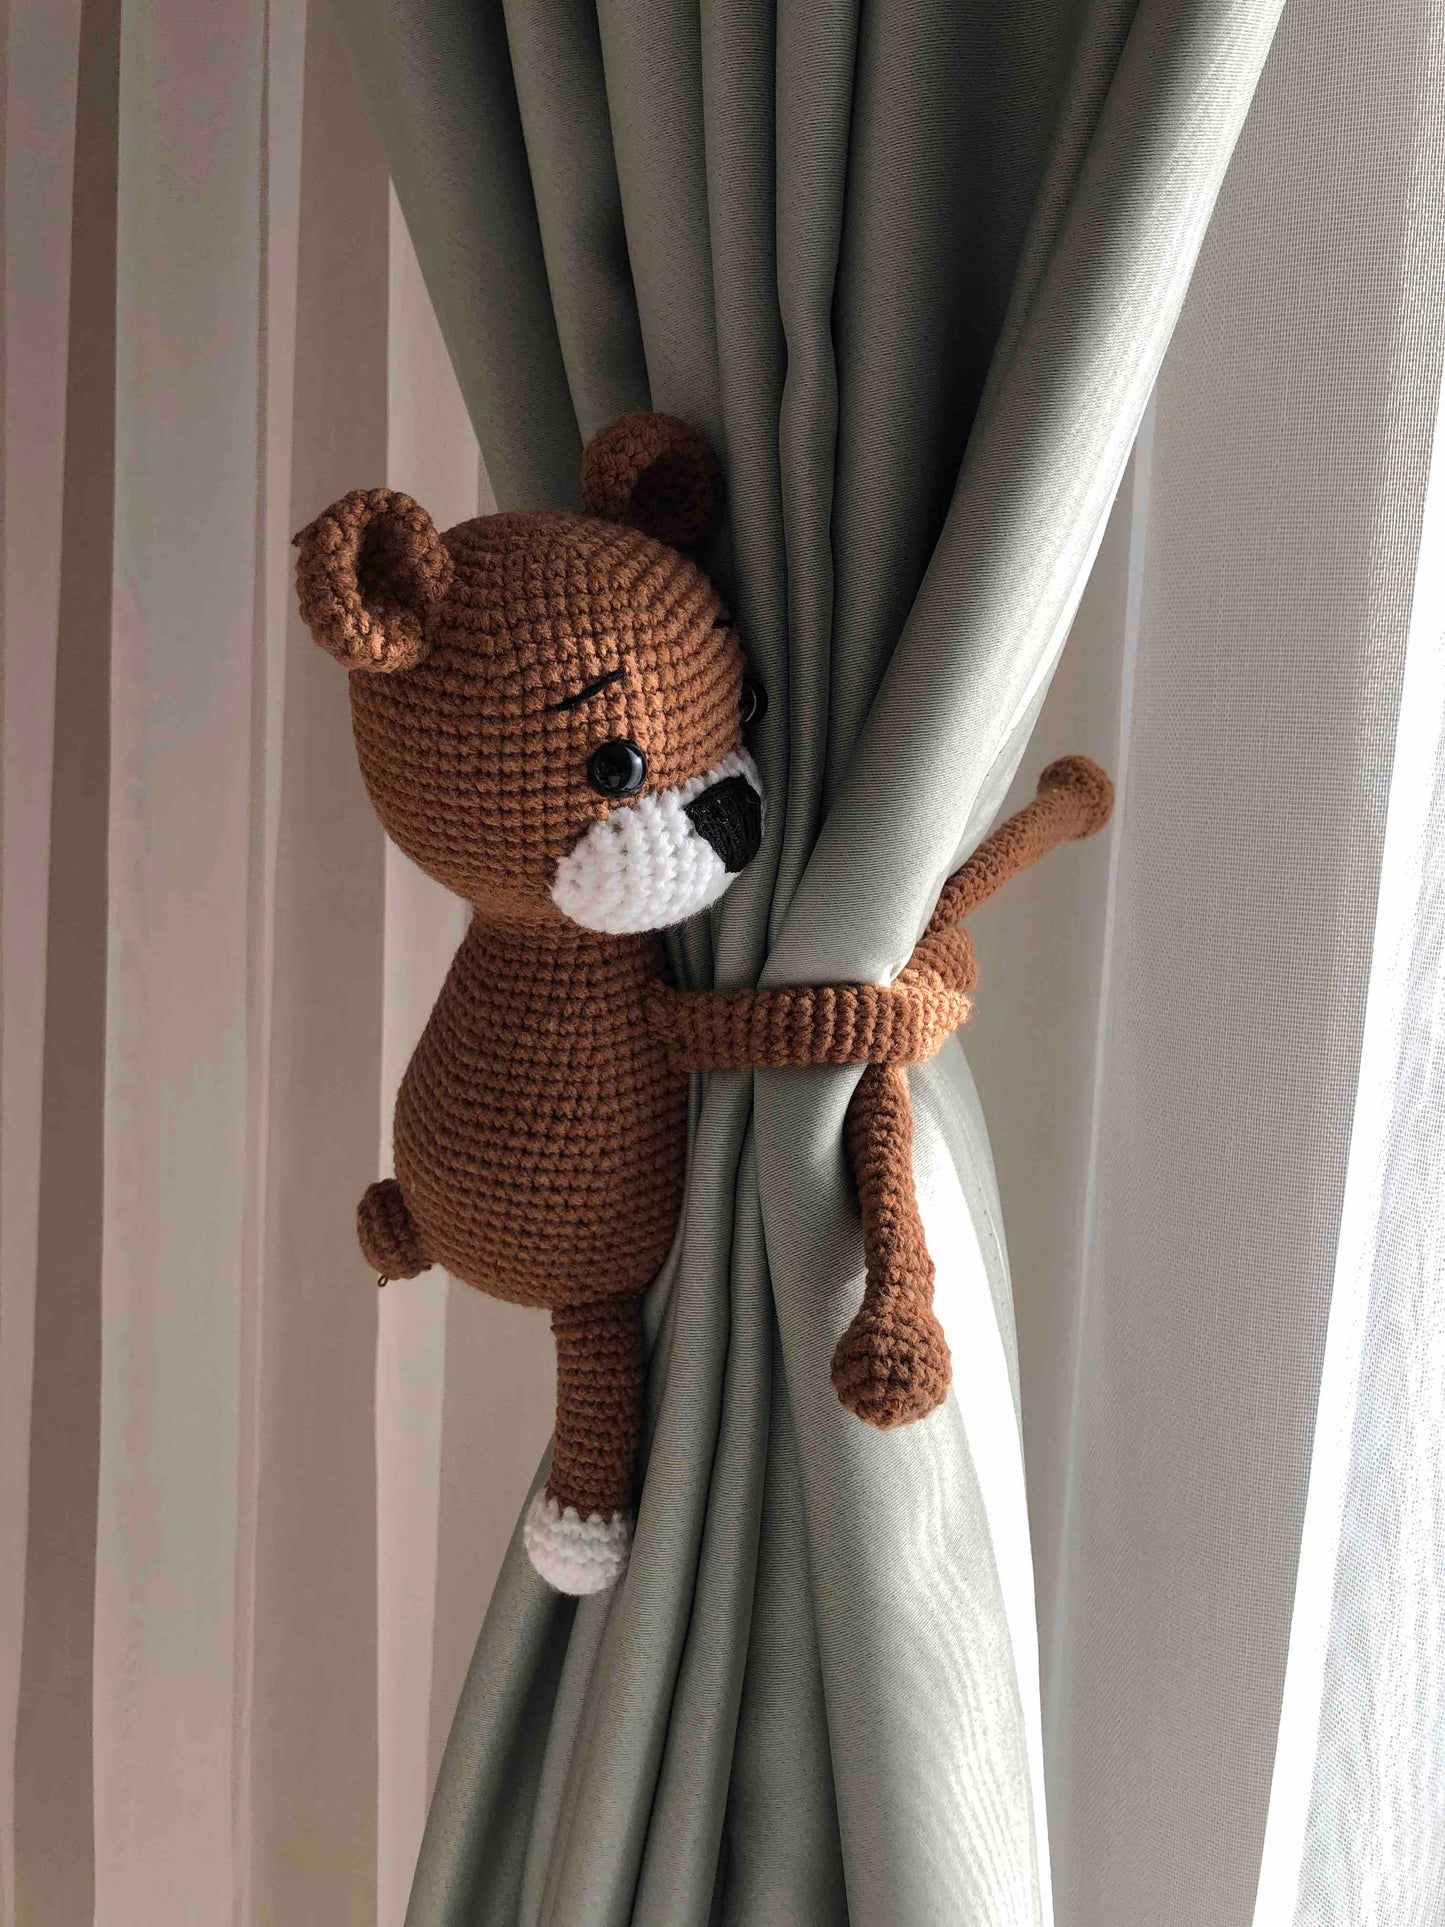 KidsKiddy™ - Teddy Bear Amigurumi Crochet Curtain Tie